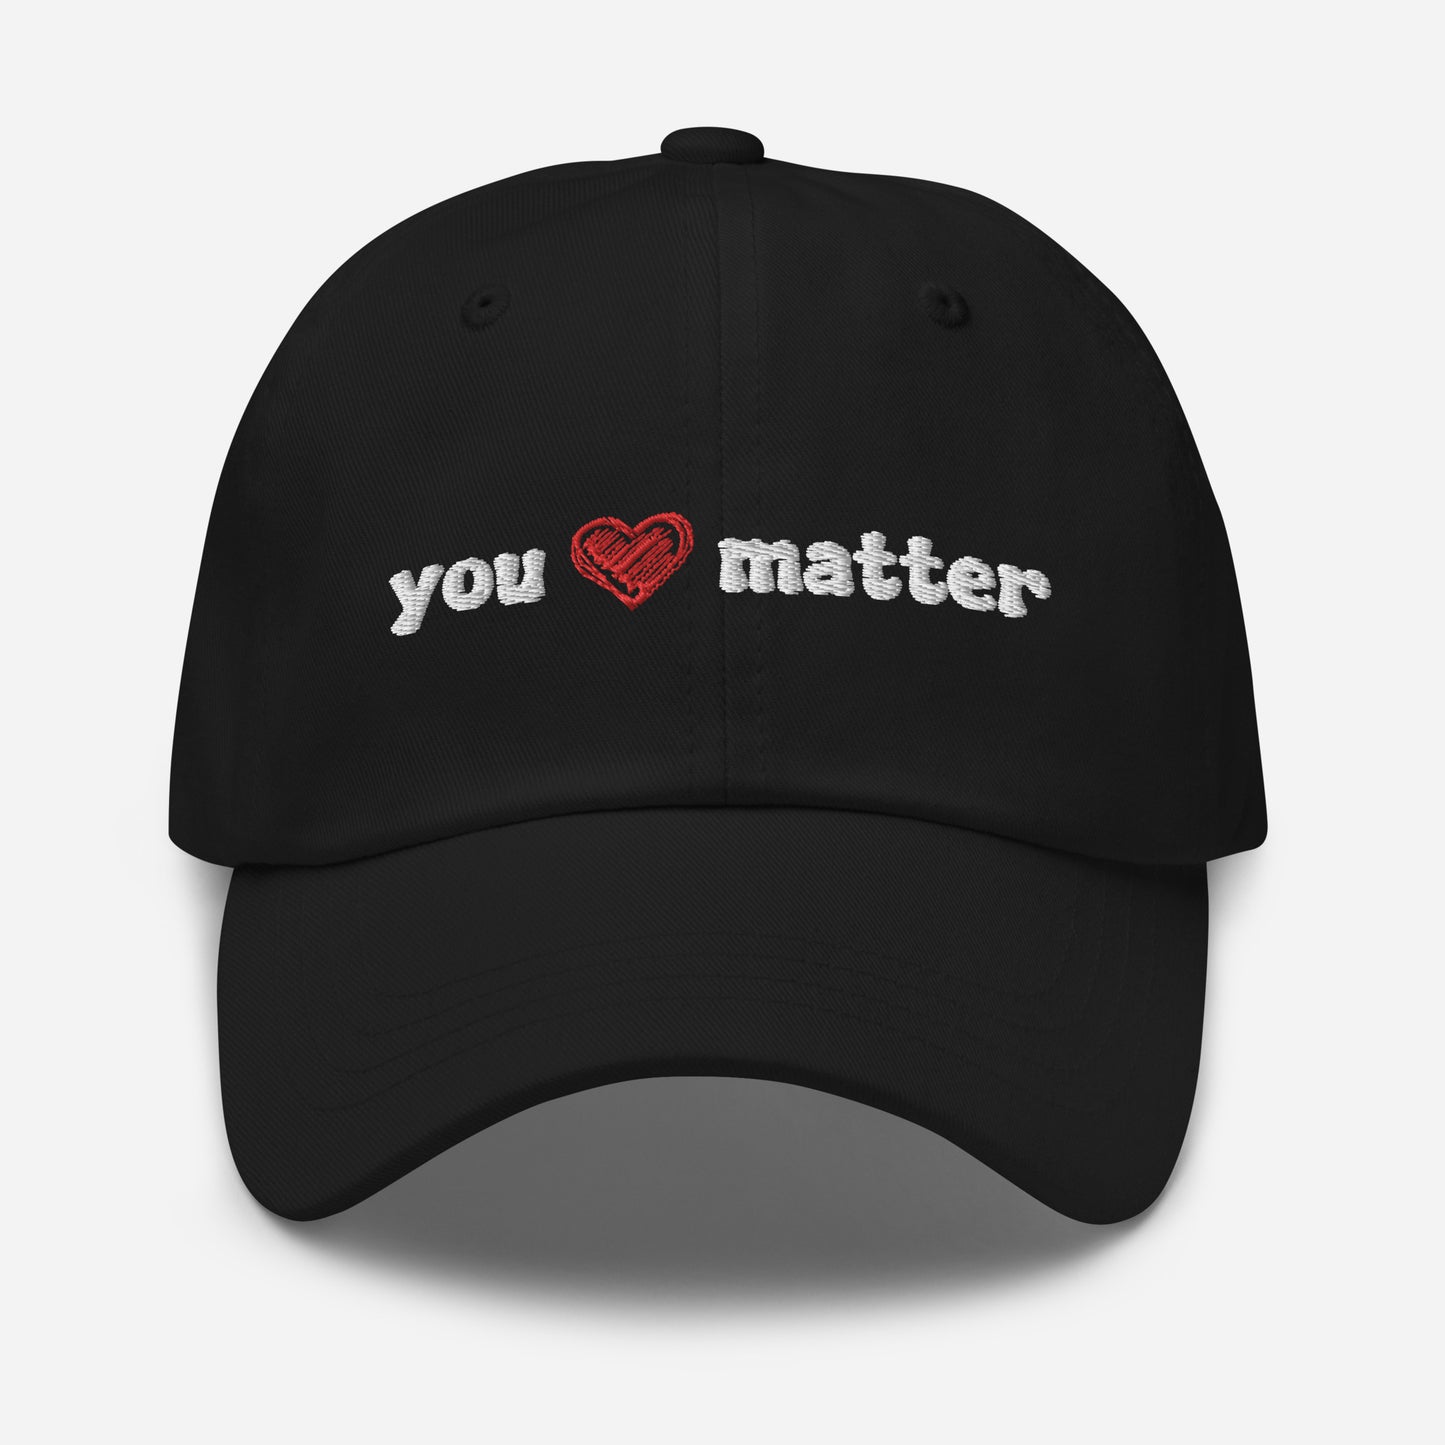 "You Matter" Dad hat